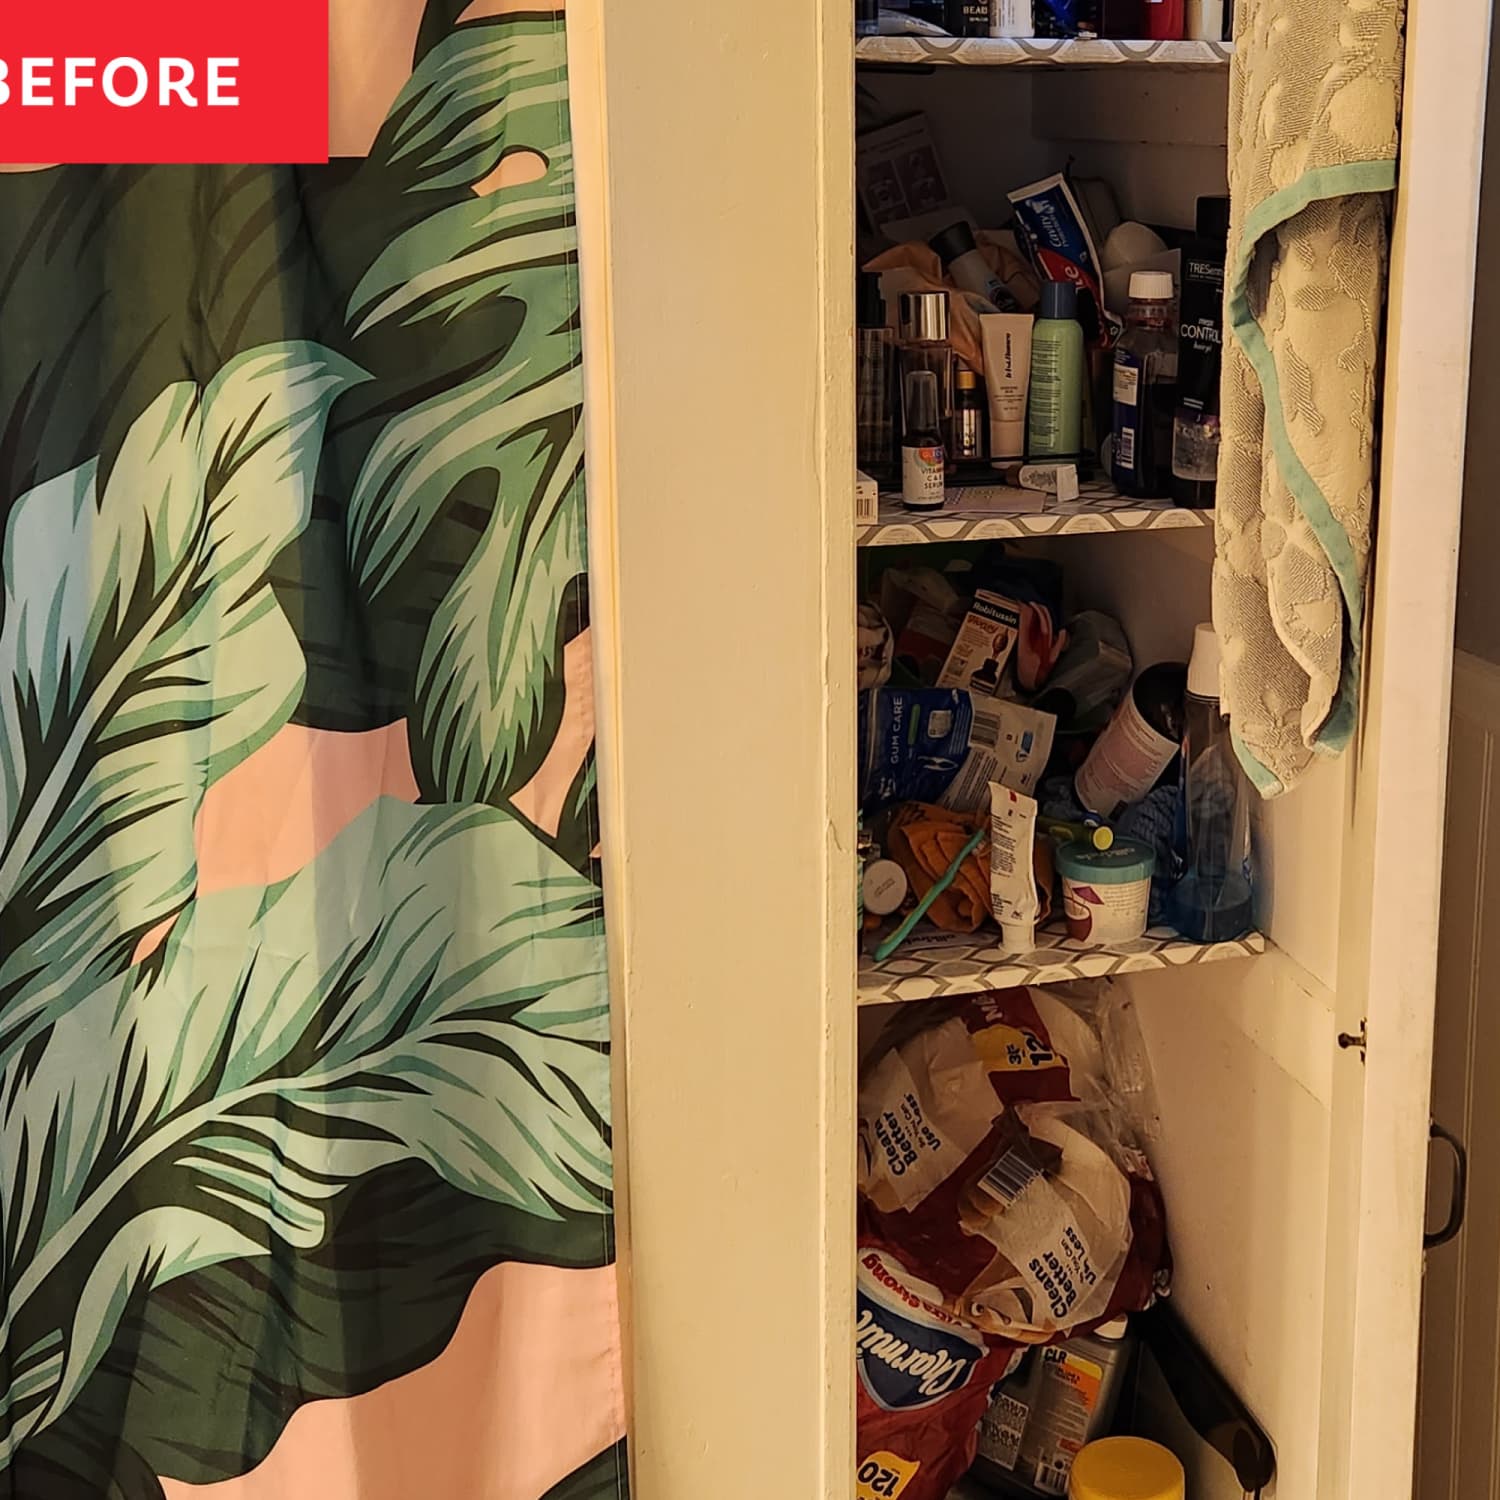 9 Ways to Clean, Declutter & Organize Your Linen Closet That'll